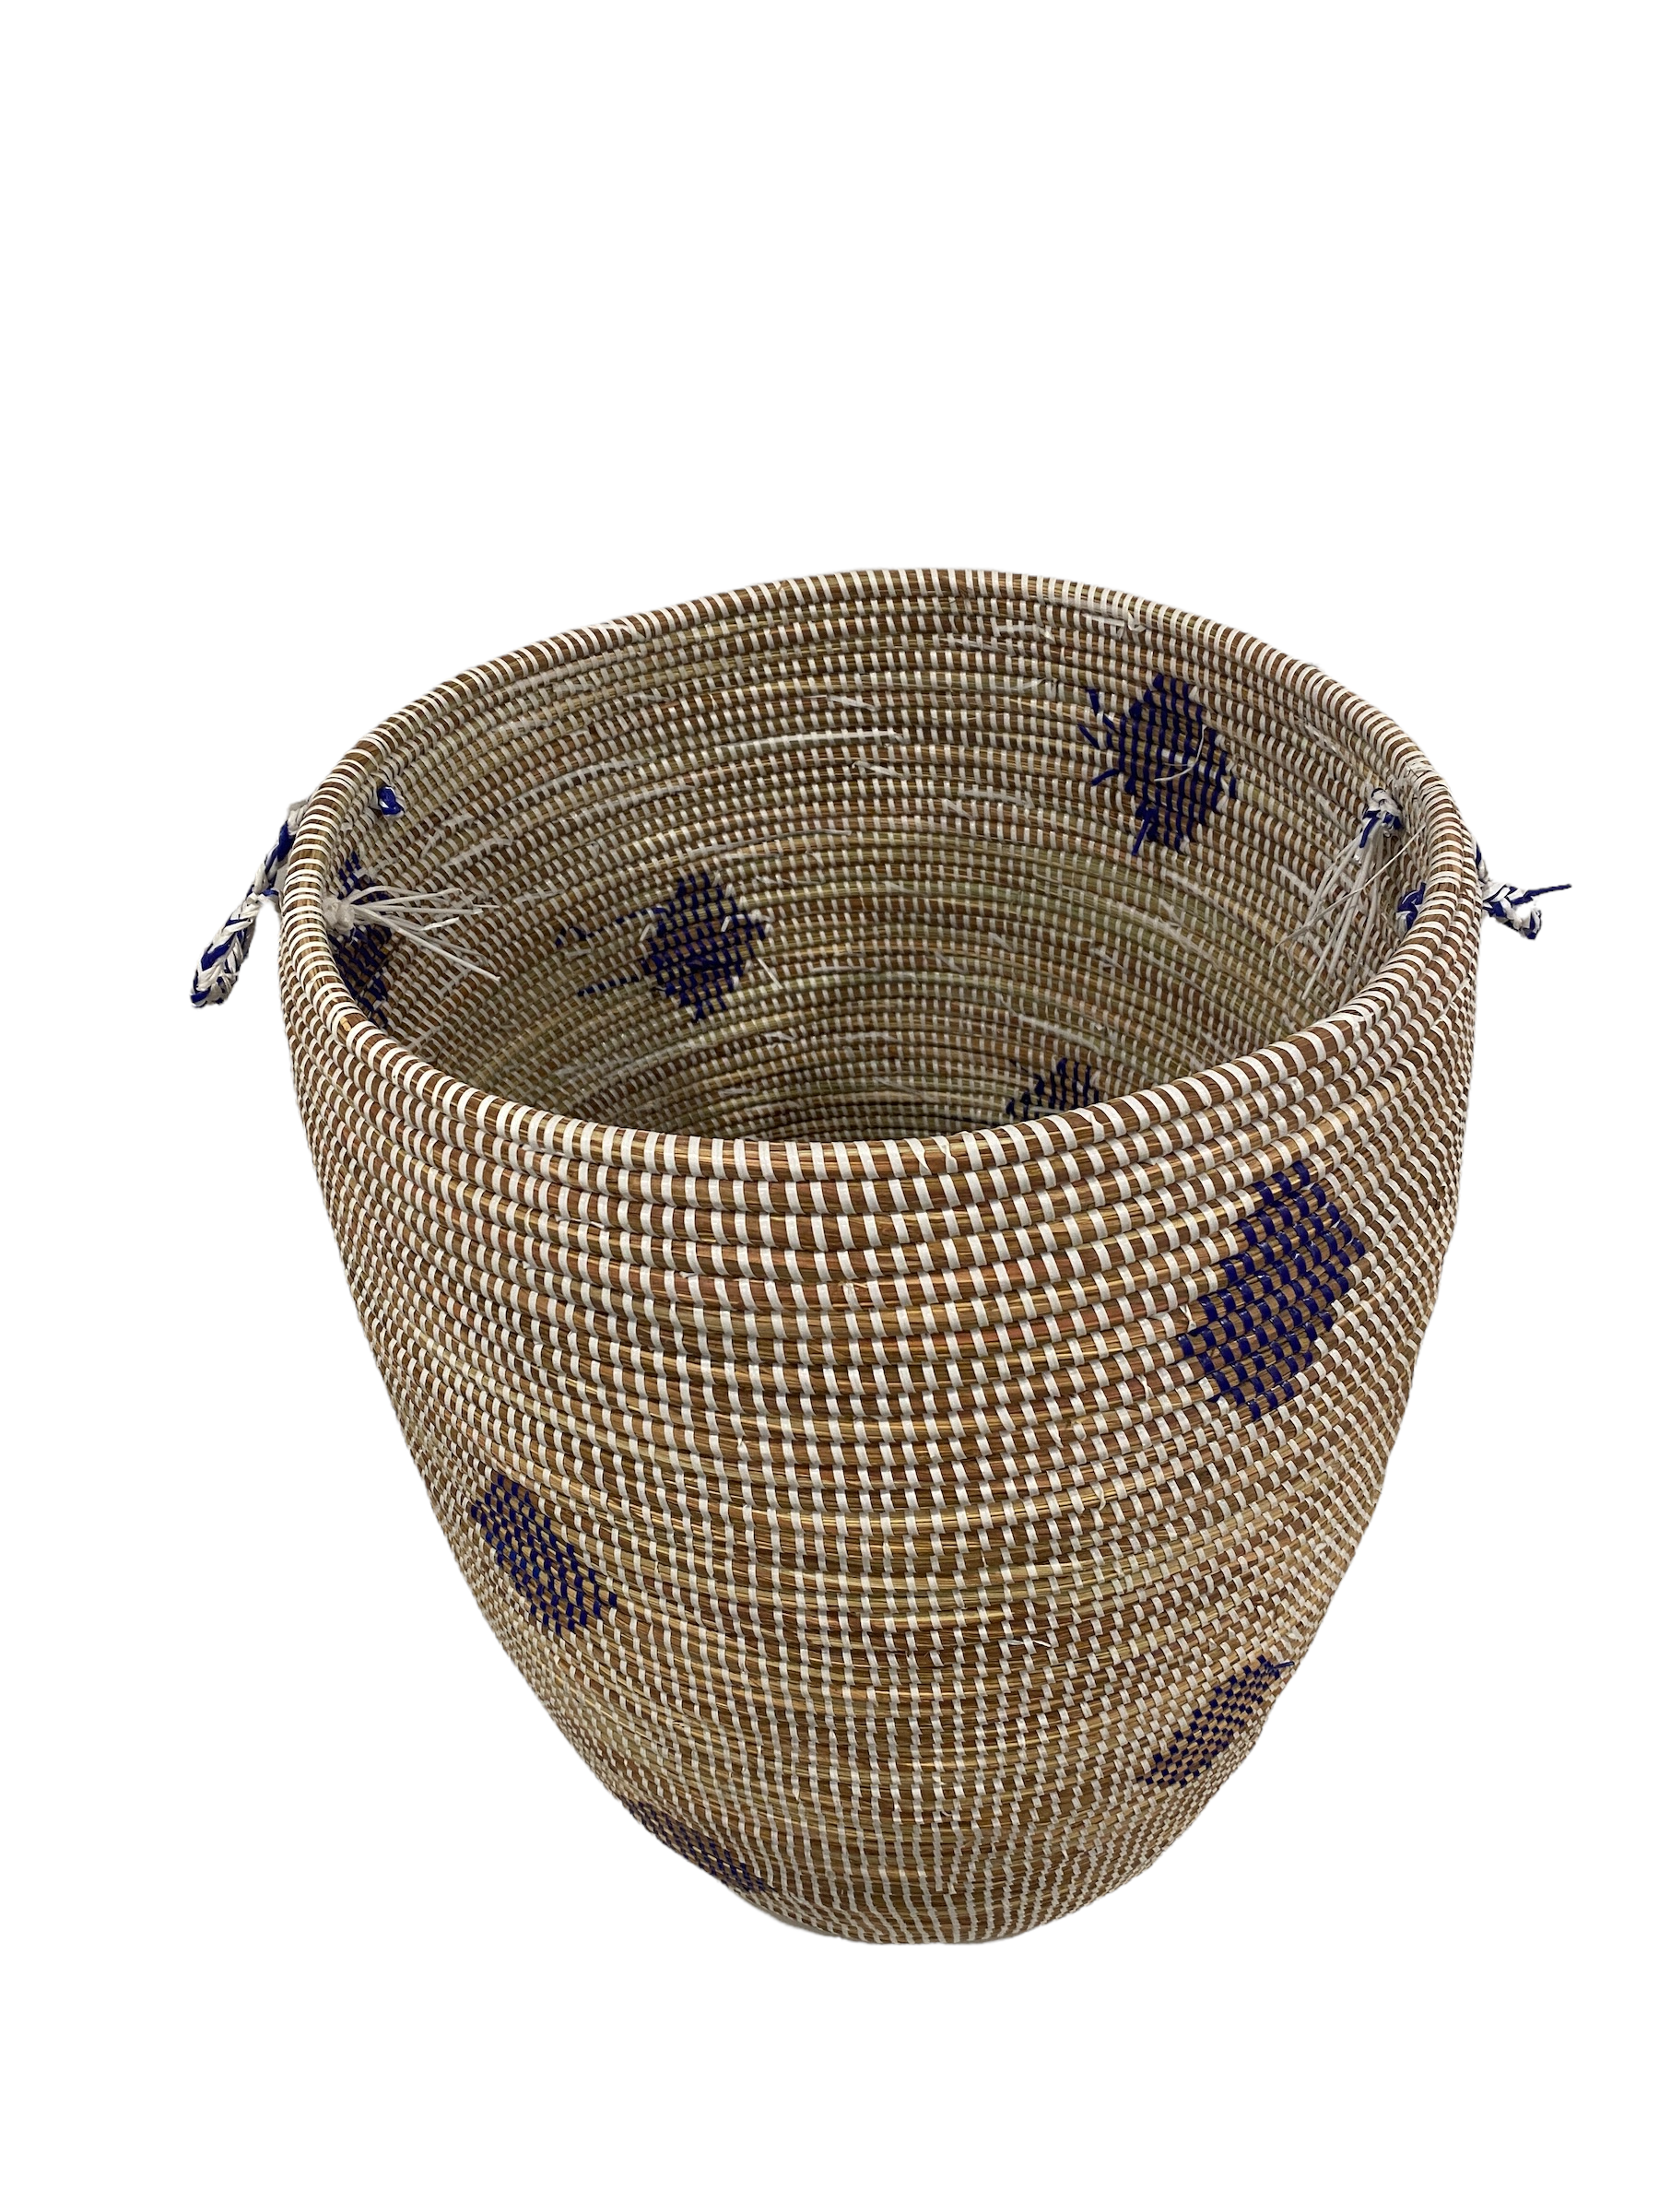 Senegal Laundry Basket - (88A.3